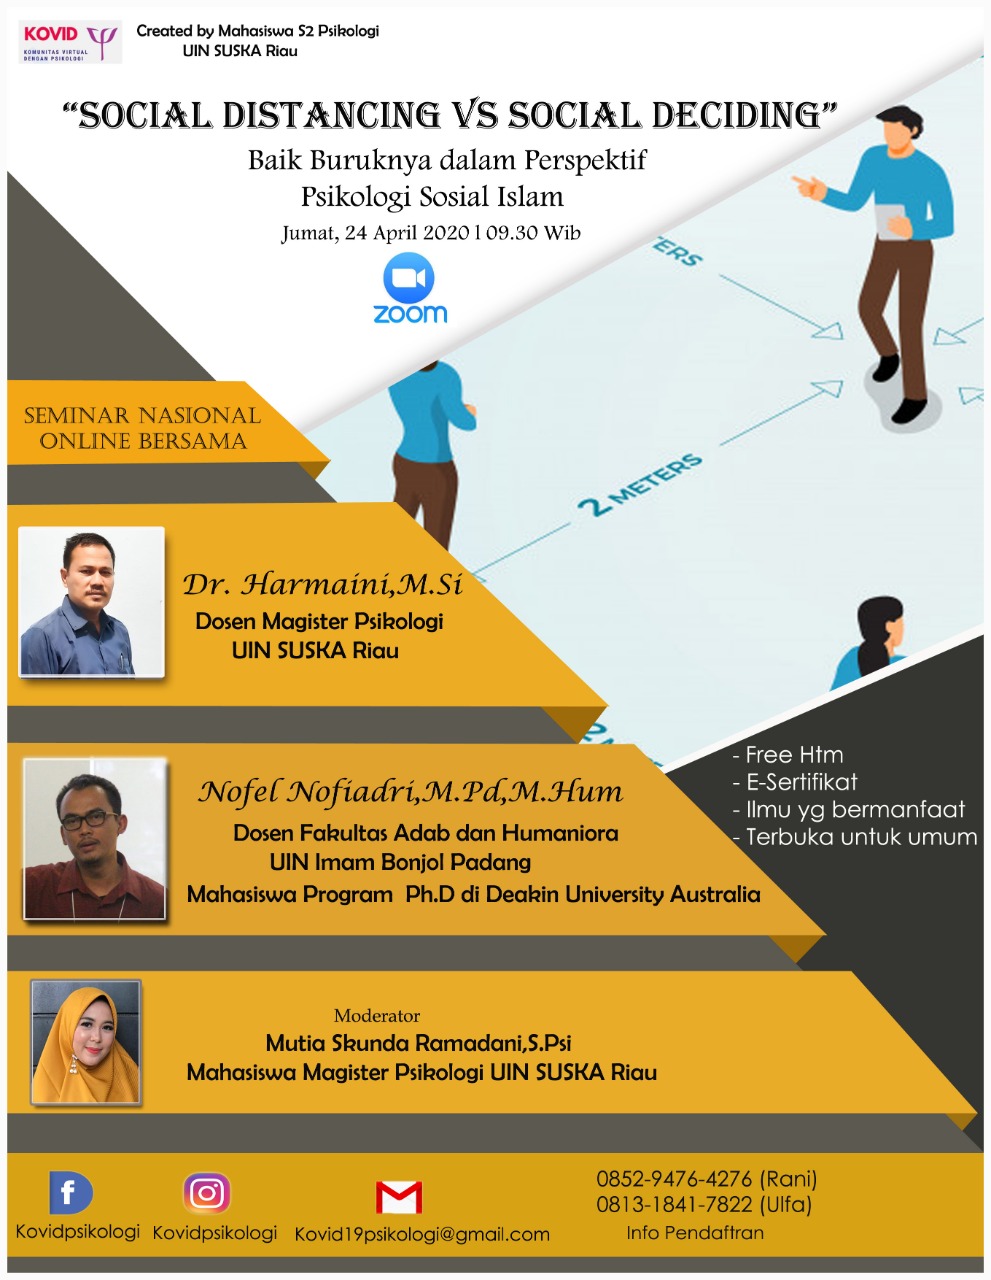 Seminar Nasional Online oleh Kovidpsikologi - mahasiswa Magister Psikologi UIN SUSKA Riau